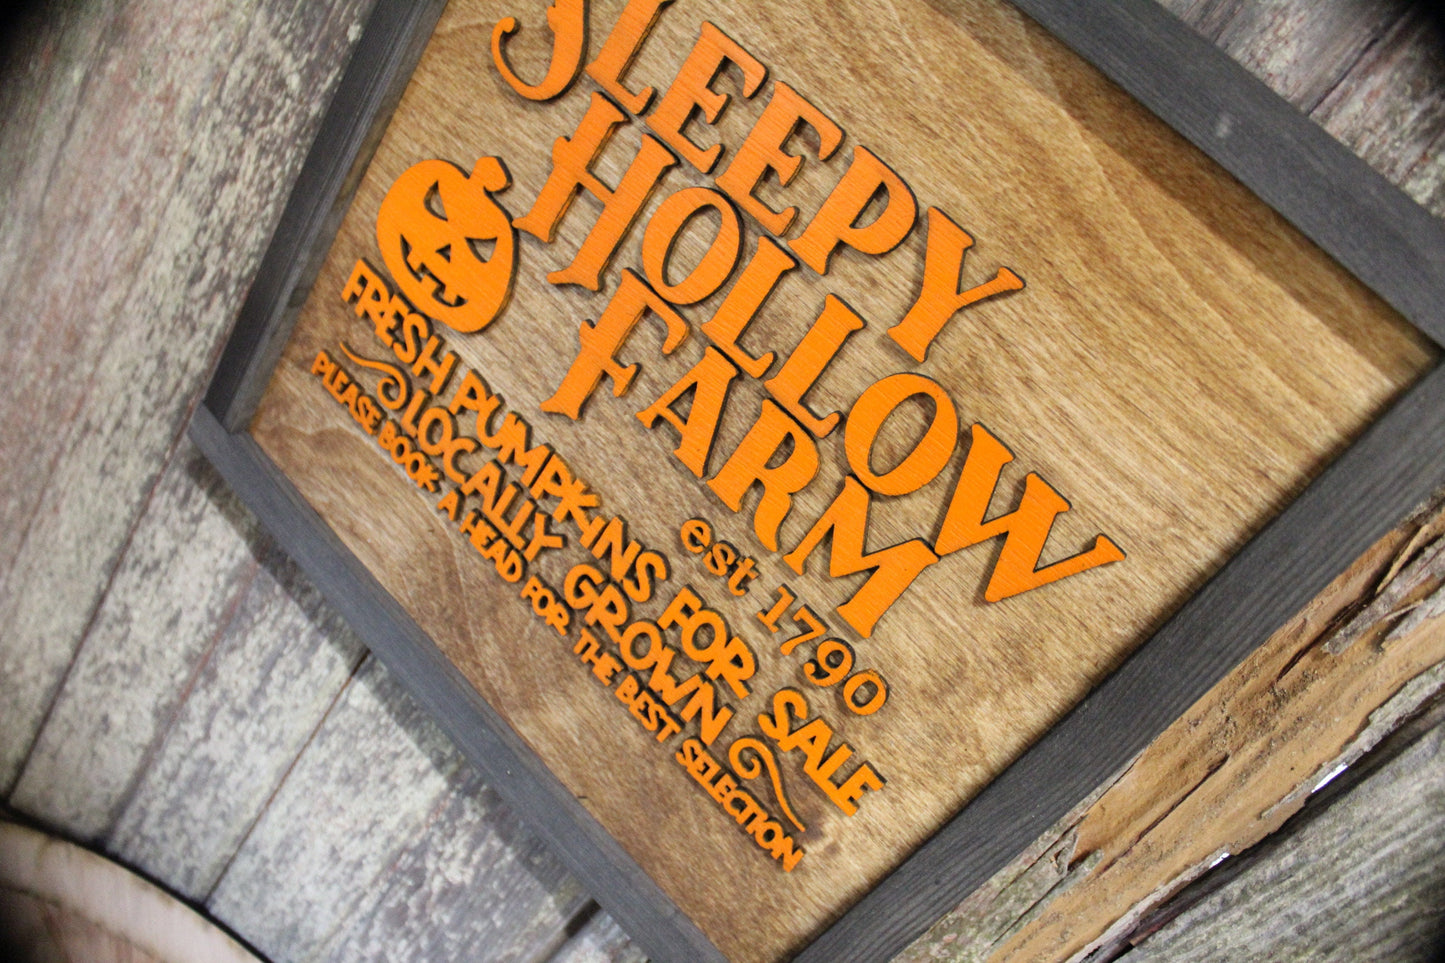 Sleepy Hollow Farm Wood Sign 3D Raised Text Fresh Pumpkins For Sale Please Book A Head Halloween Joke Silly Wall Hanging Decoration Decor